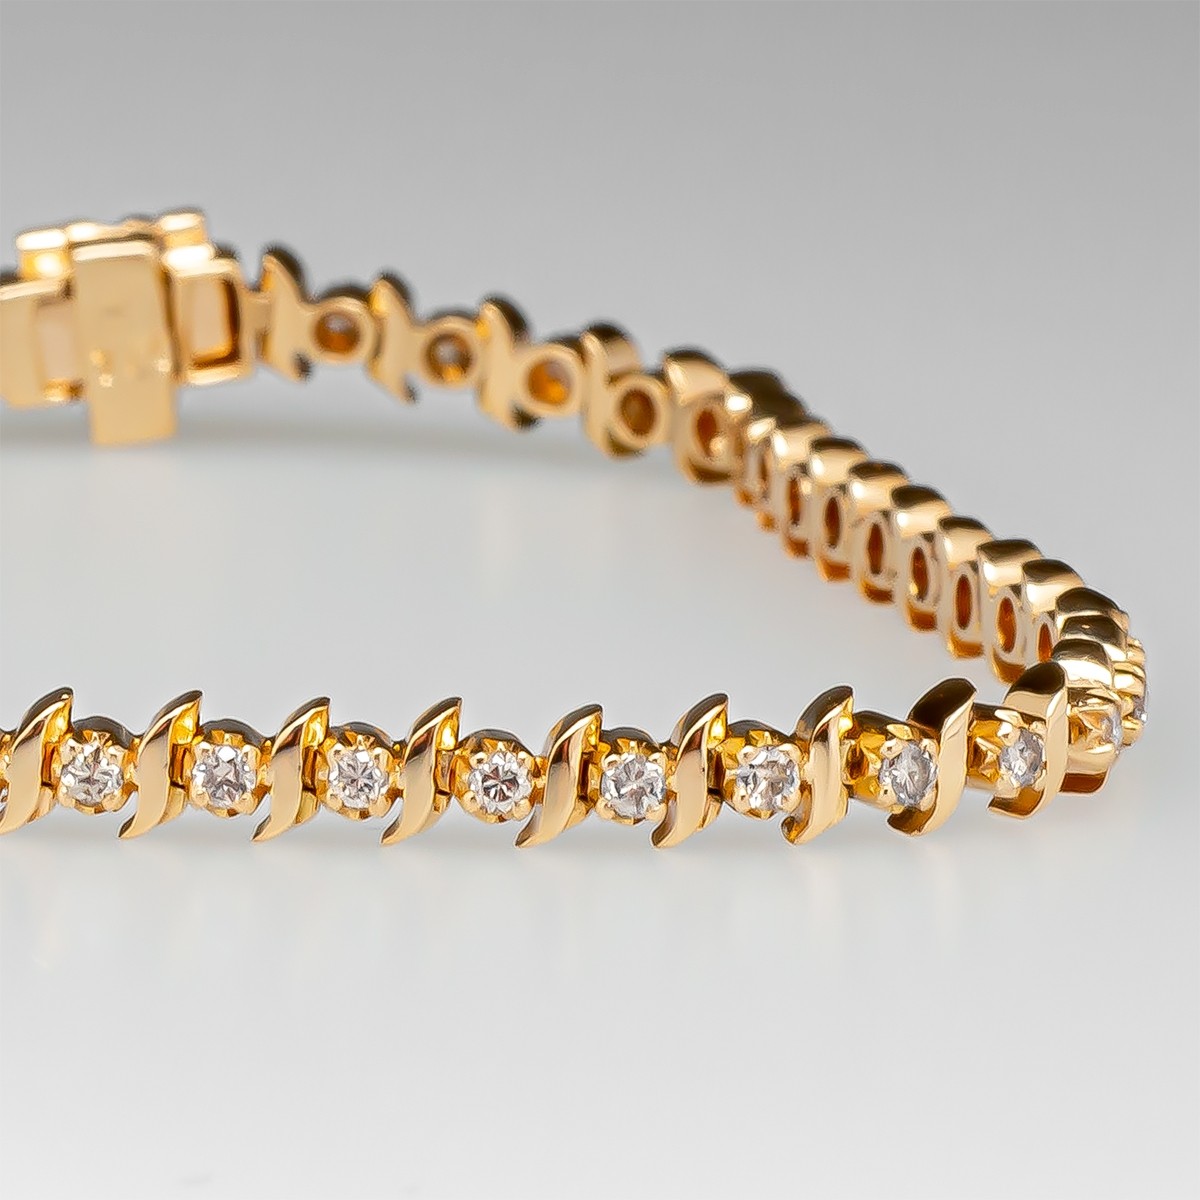 1 Carat Diamond Tennis Bracelet 14K Yellow Gold 7 Inches